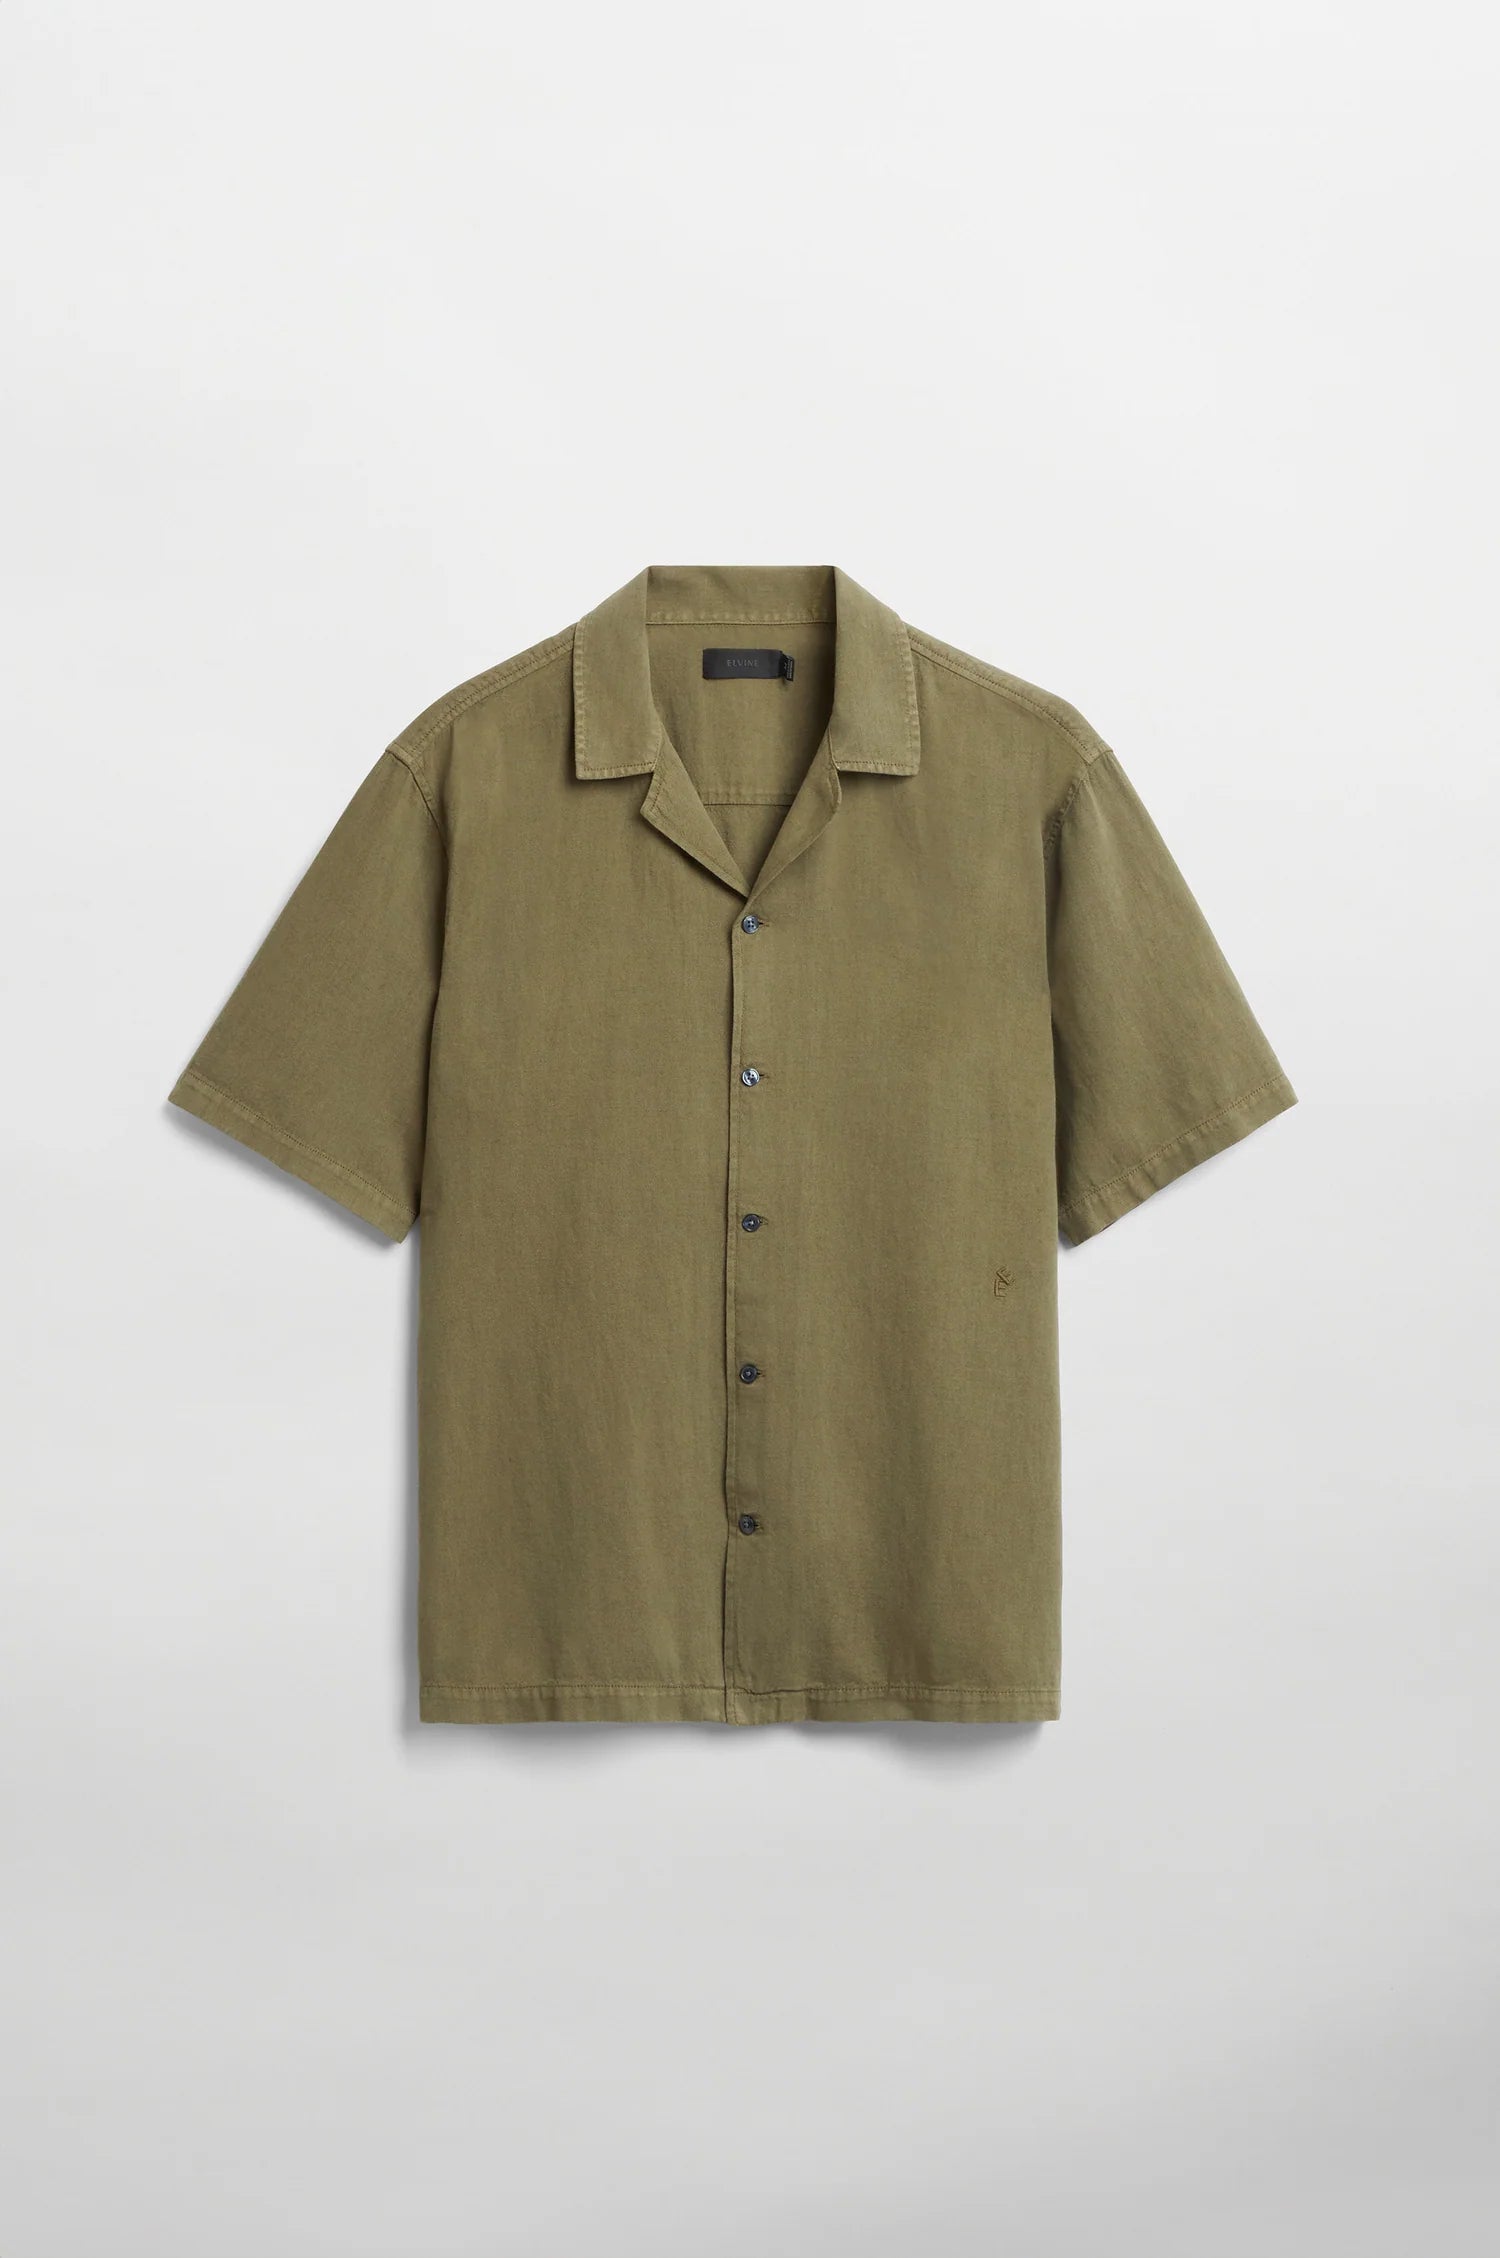 Elvine Kilian Linen Shirt, Olive